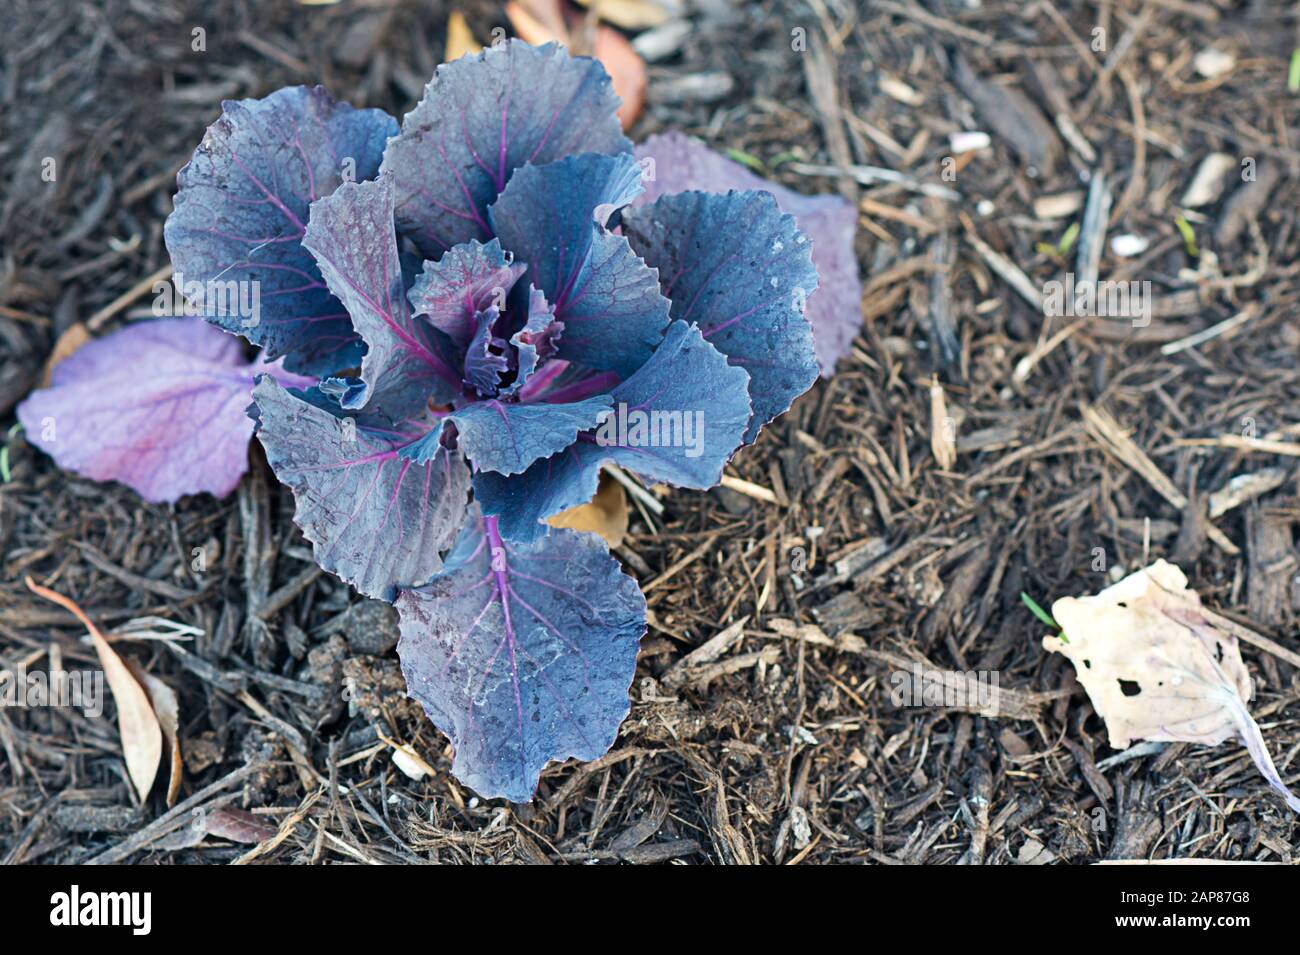 A purple, leafy plant similar to lettuce Stock Photo